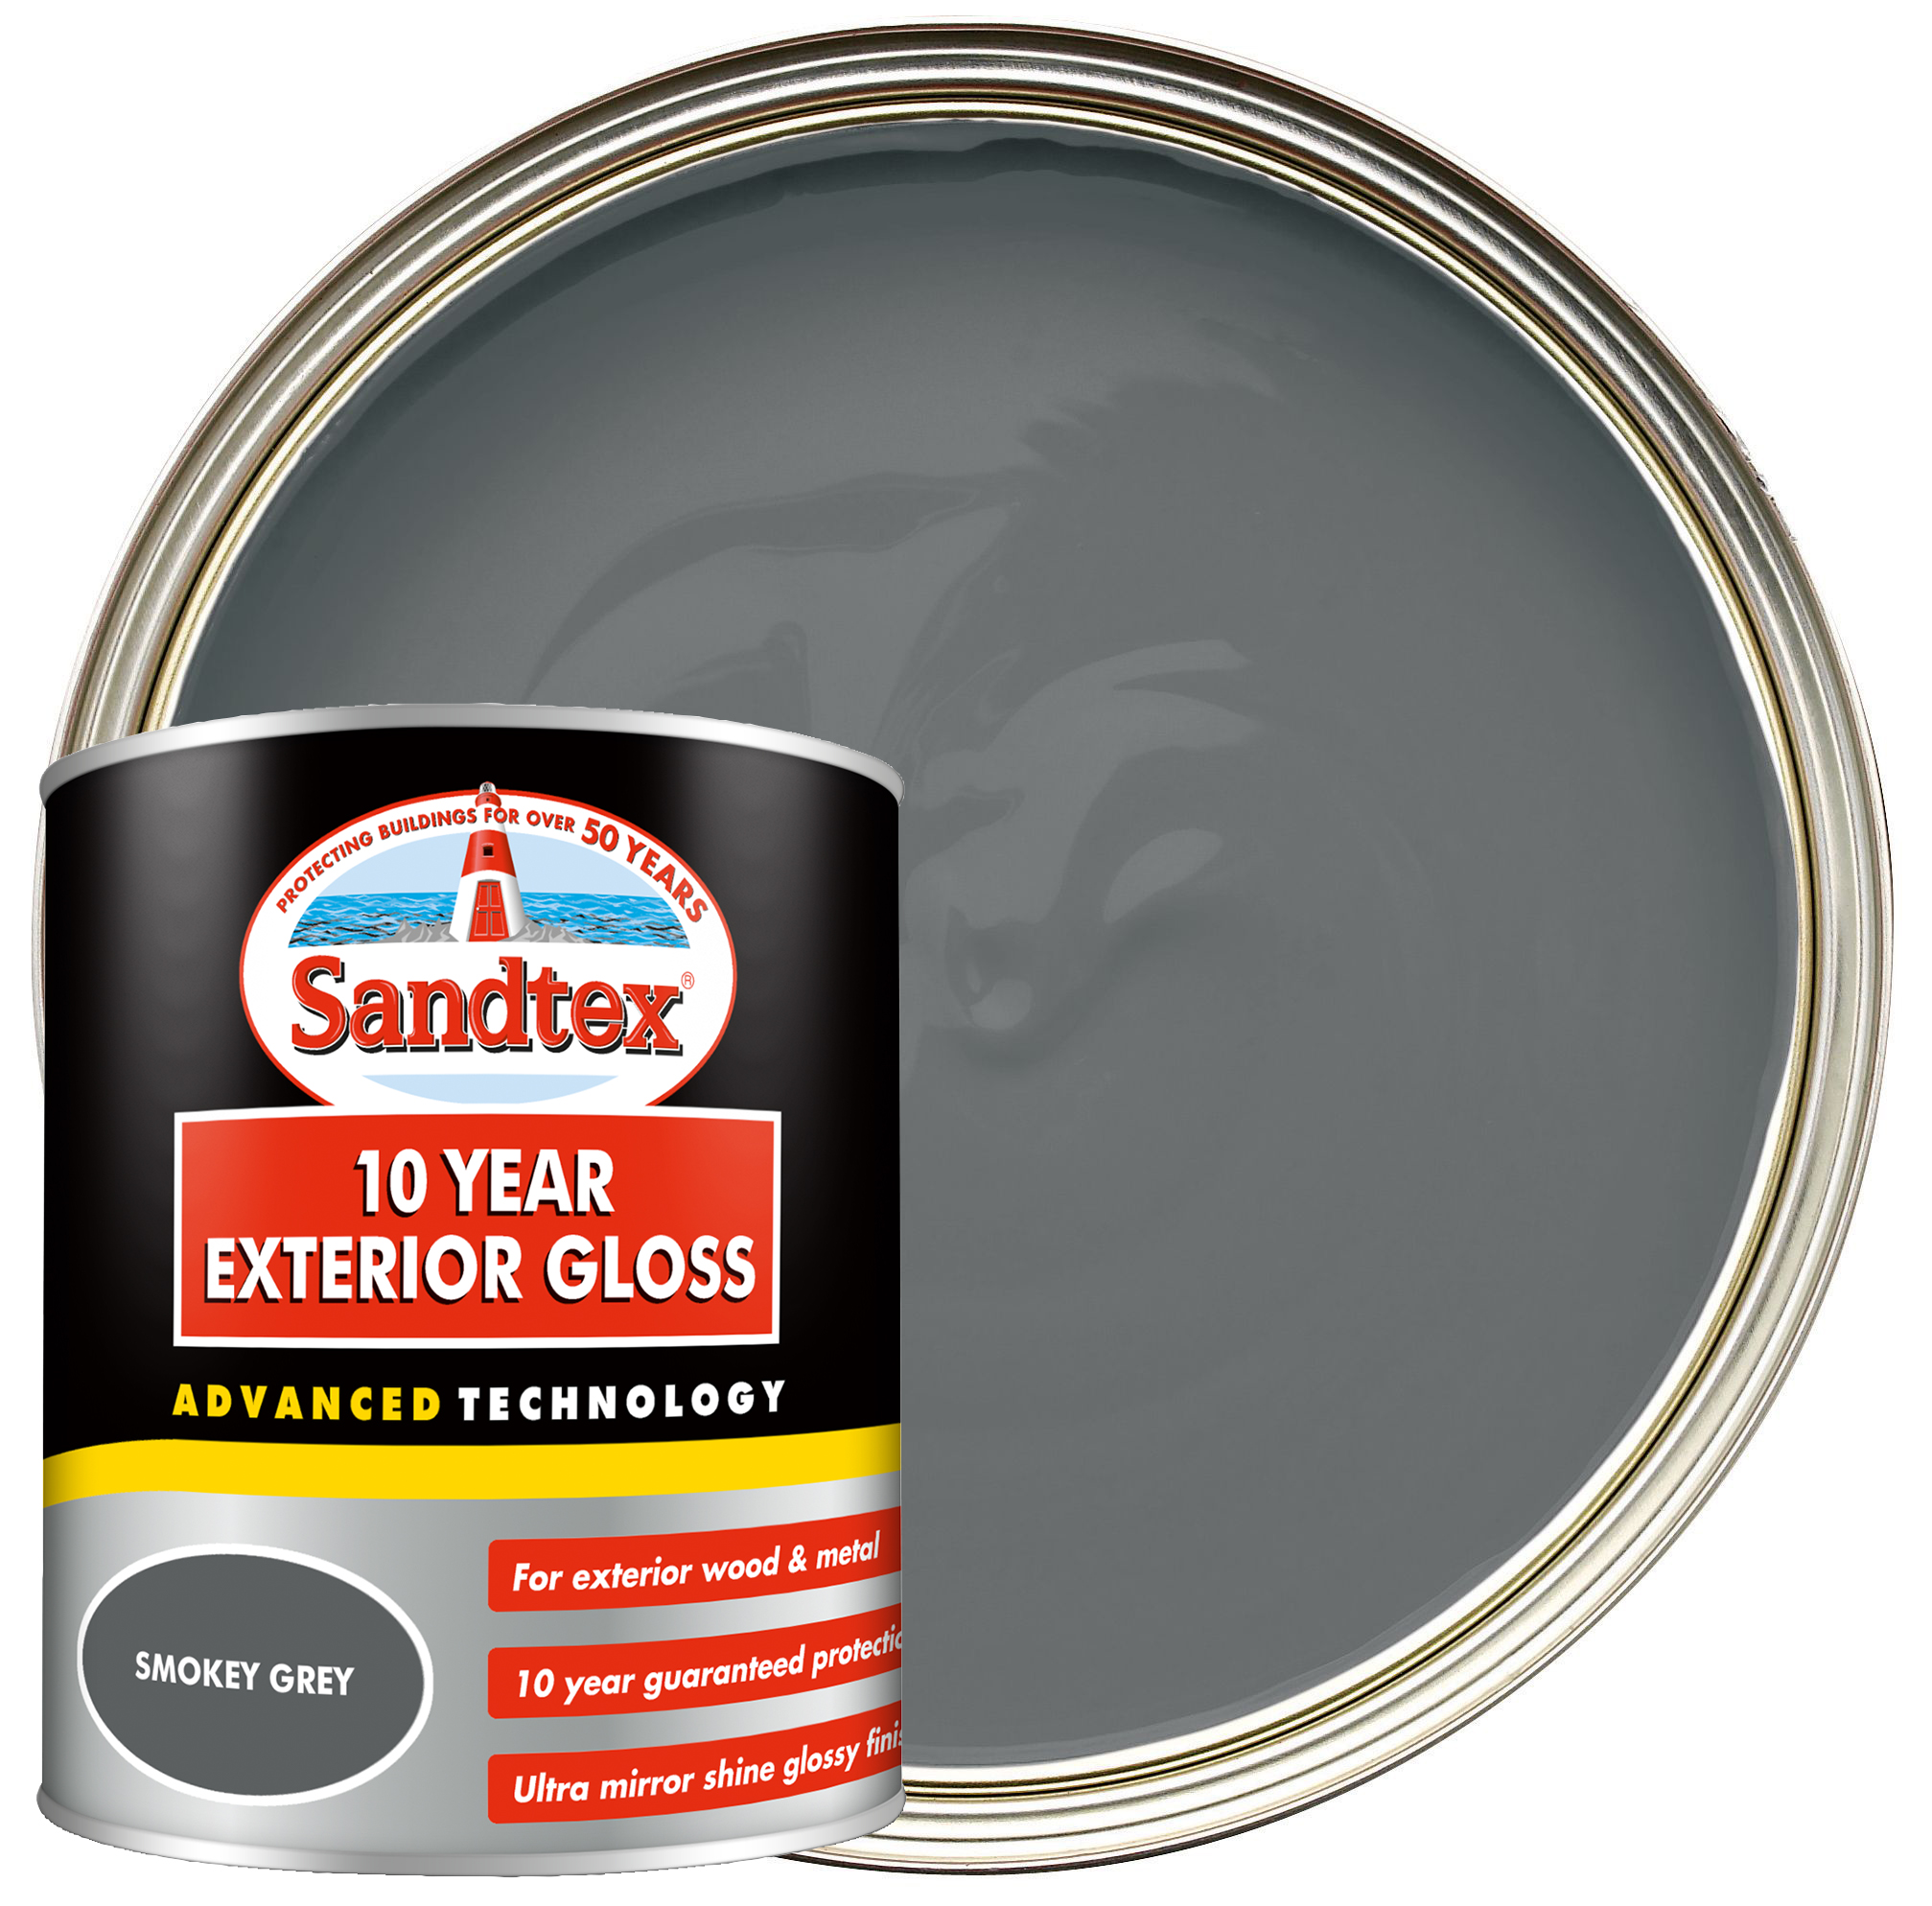 Image of Sandtex 10 Year Exterior Gloss Paint - Smoky Grey - 750ml